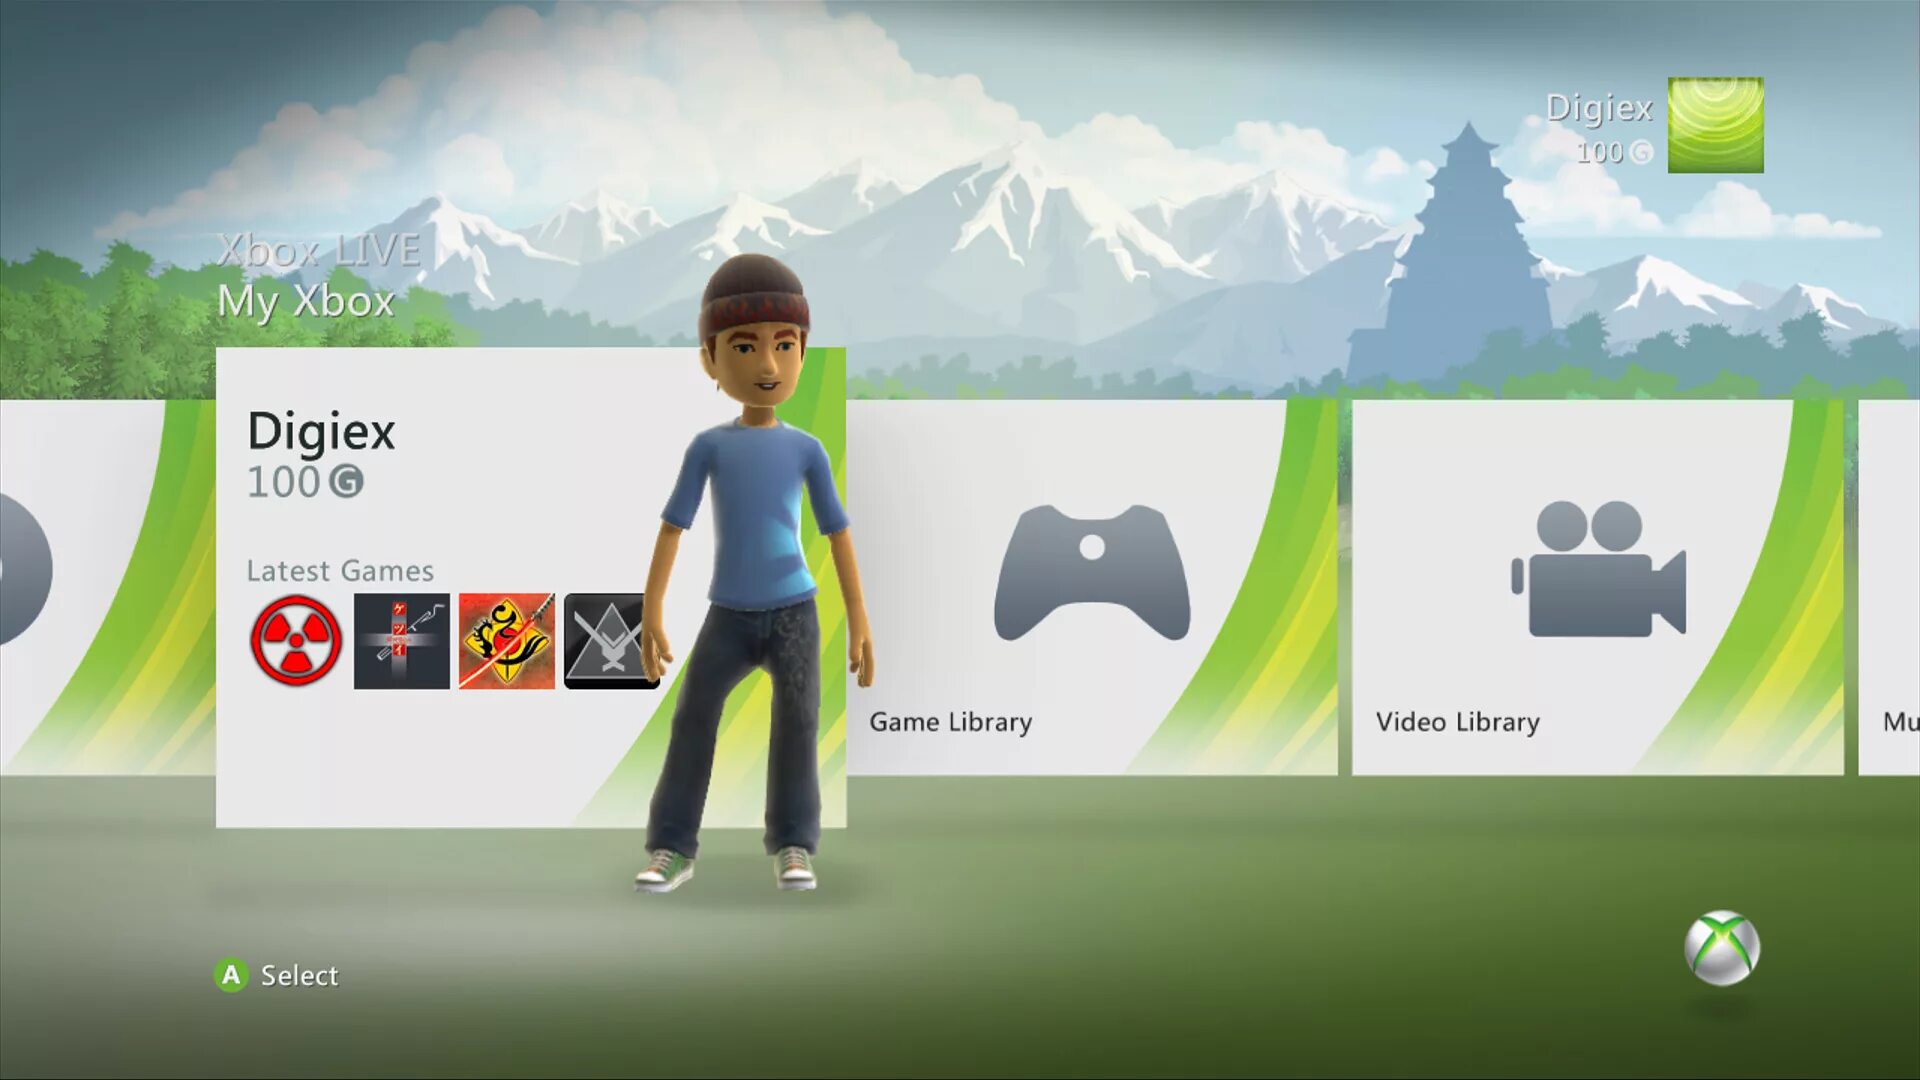 Фрибут Xbox 360 экран. Xbox 360 freeboot меню. Скины Xbox 360. Dashboard Xbox 360 freeboot. Игры для иксбокс 360 фрибут